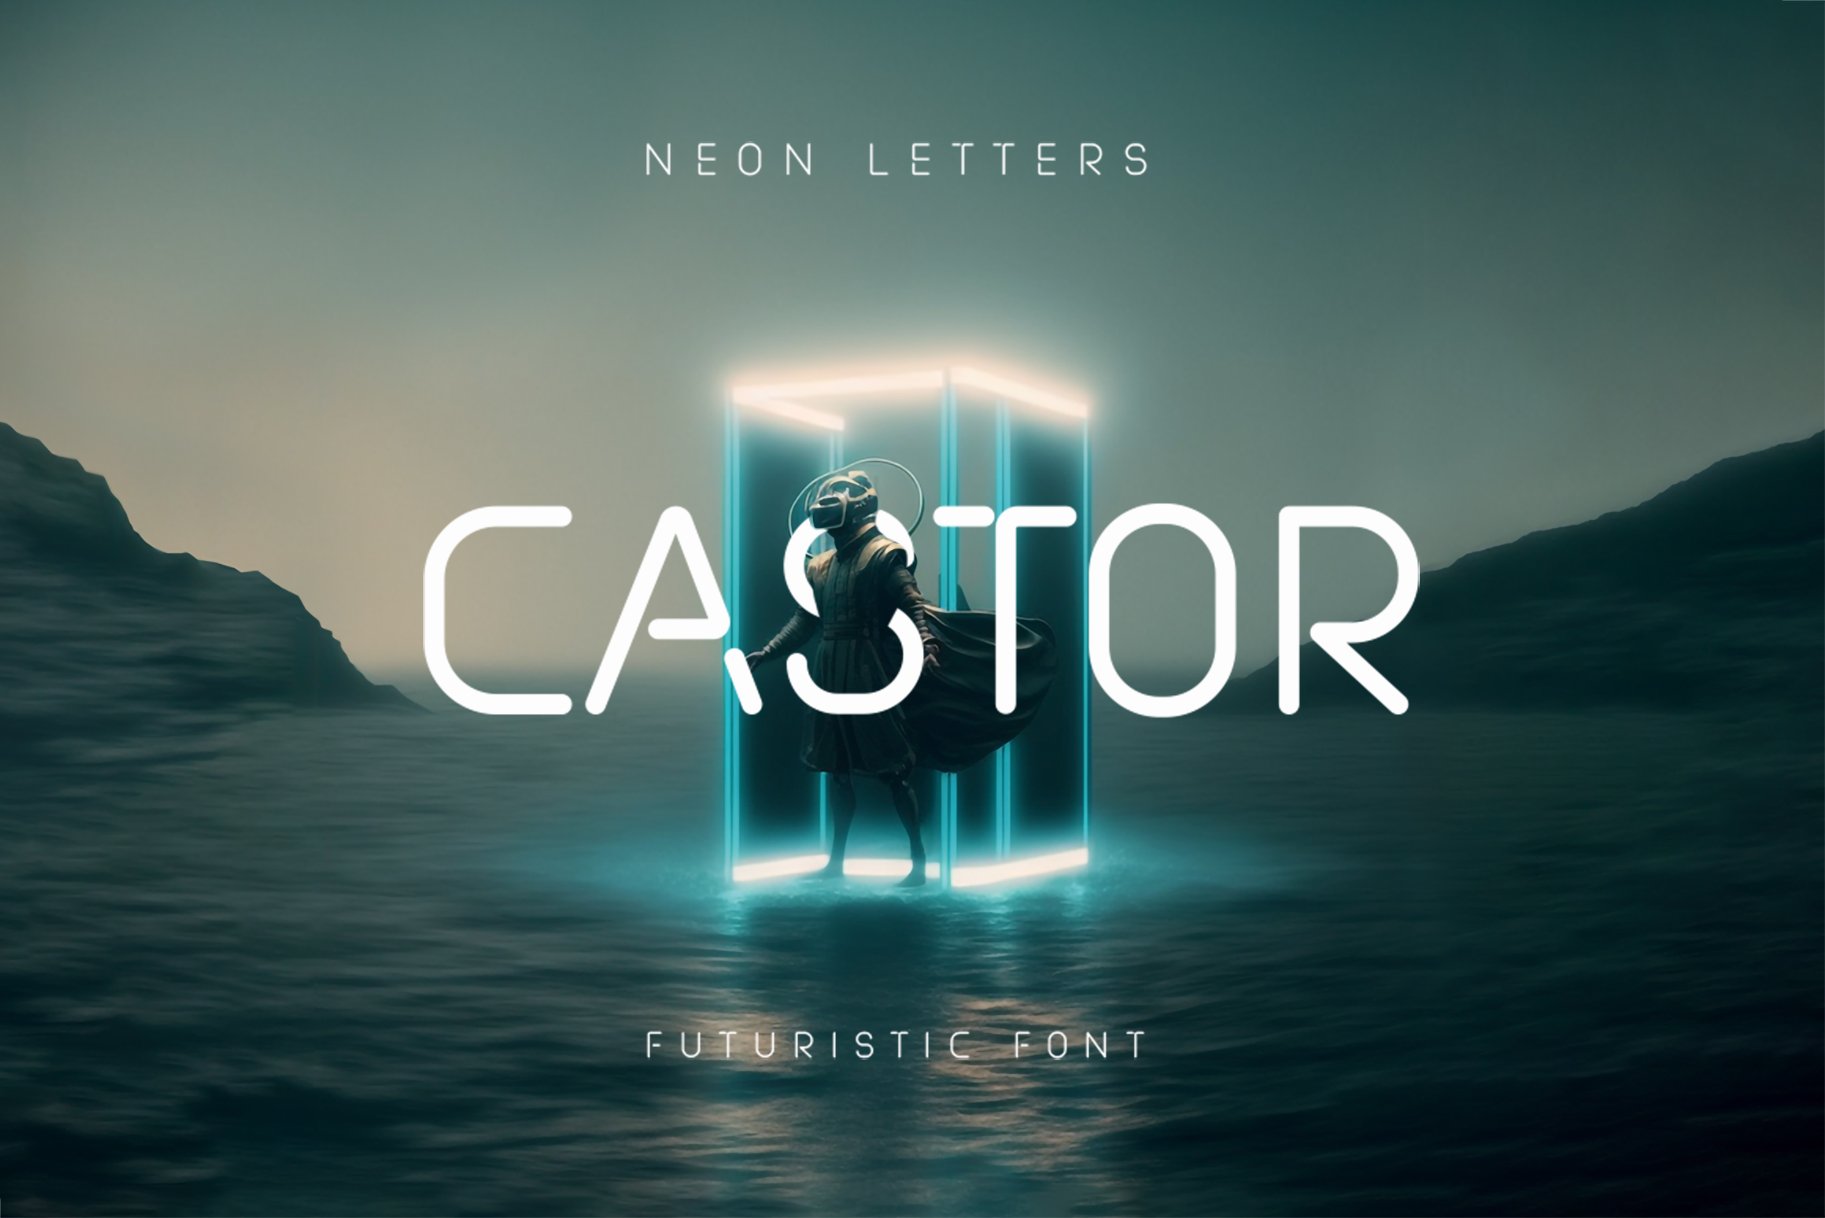 Castor - Futuristic Font cover image.